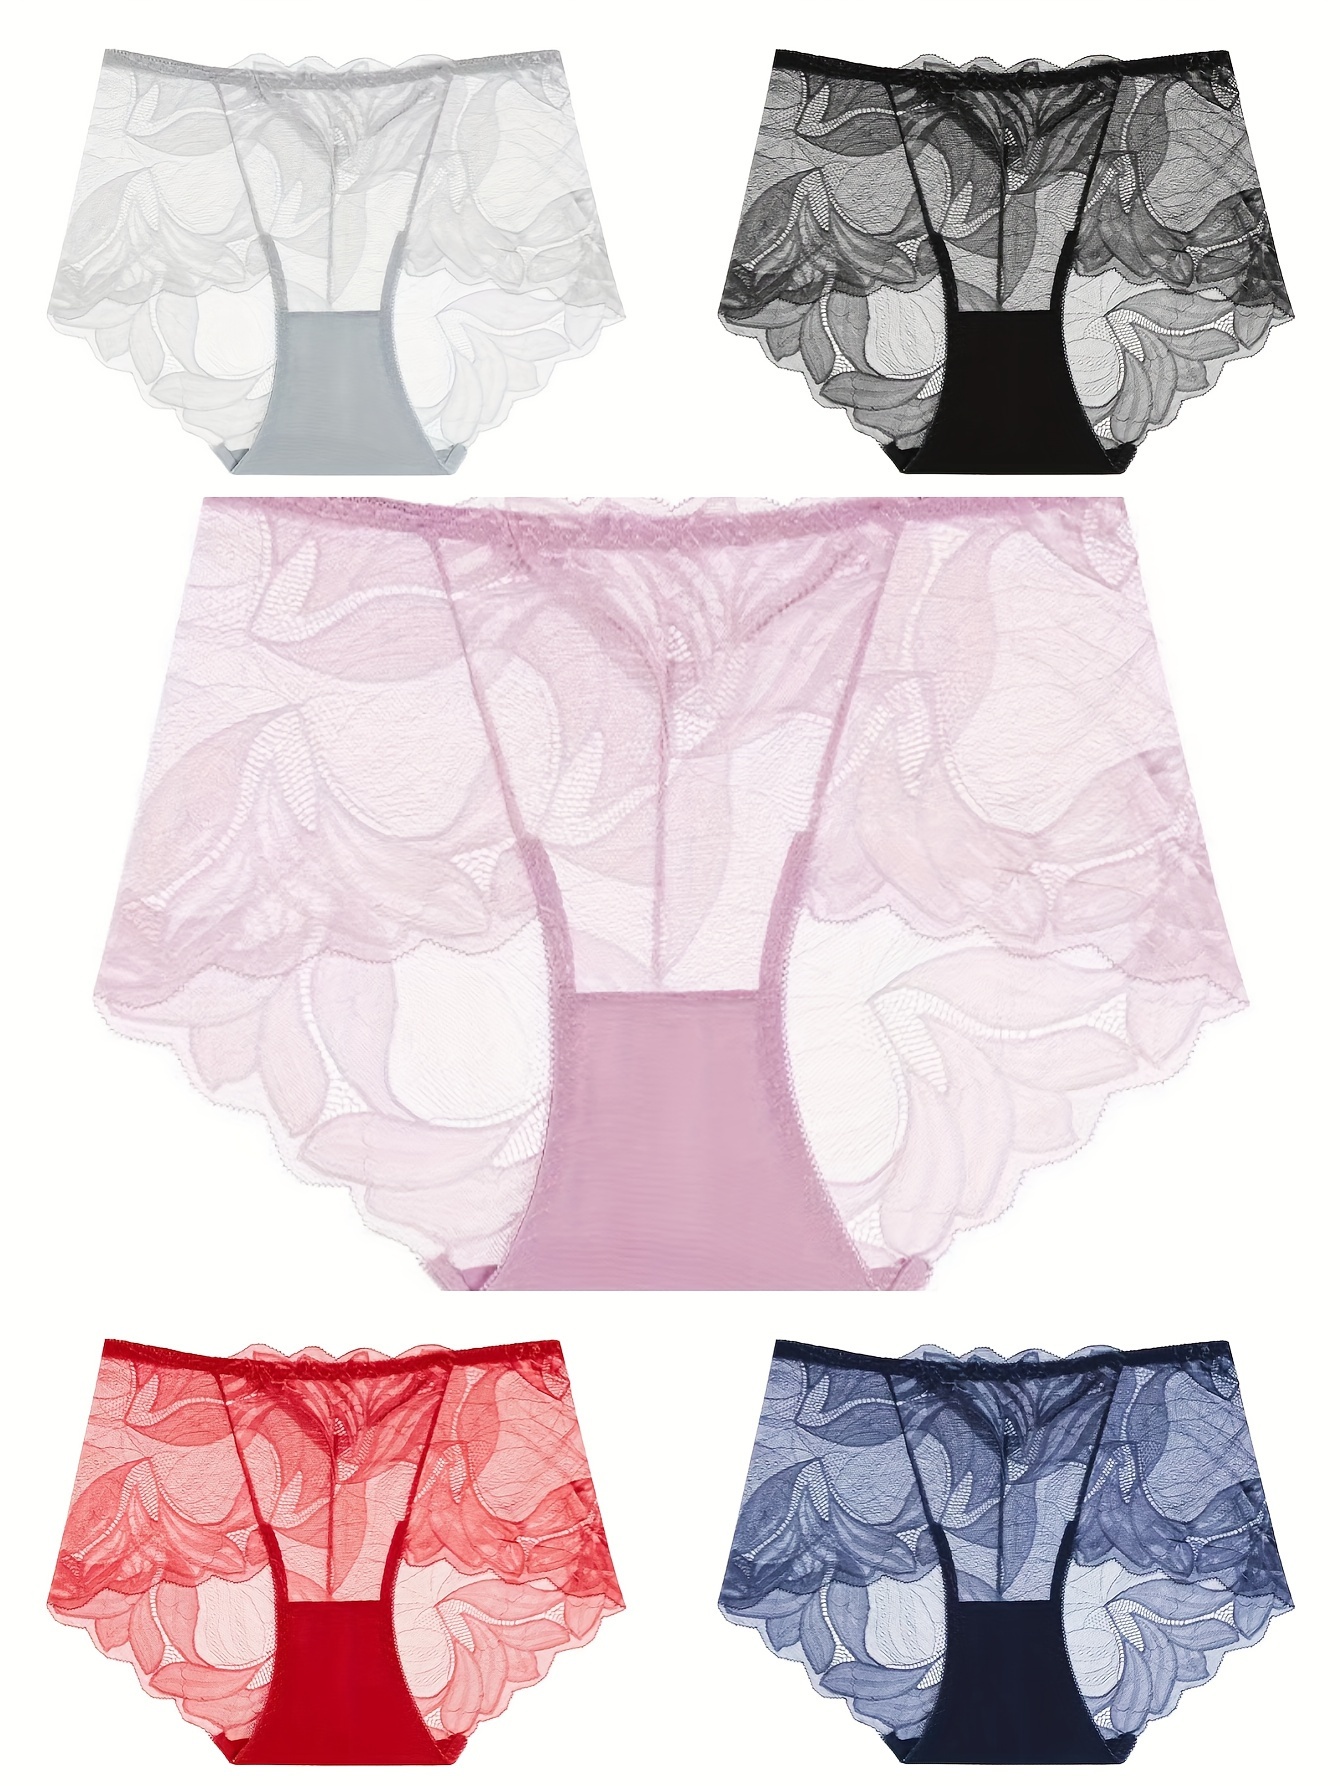 Clear Pantiessexy Lace Briefs 3pcs Set - Transparent Nylon Panties For  Women